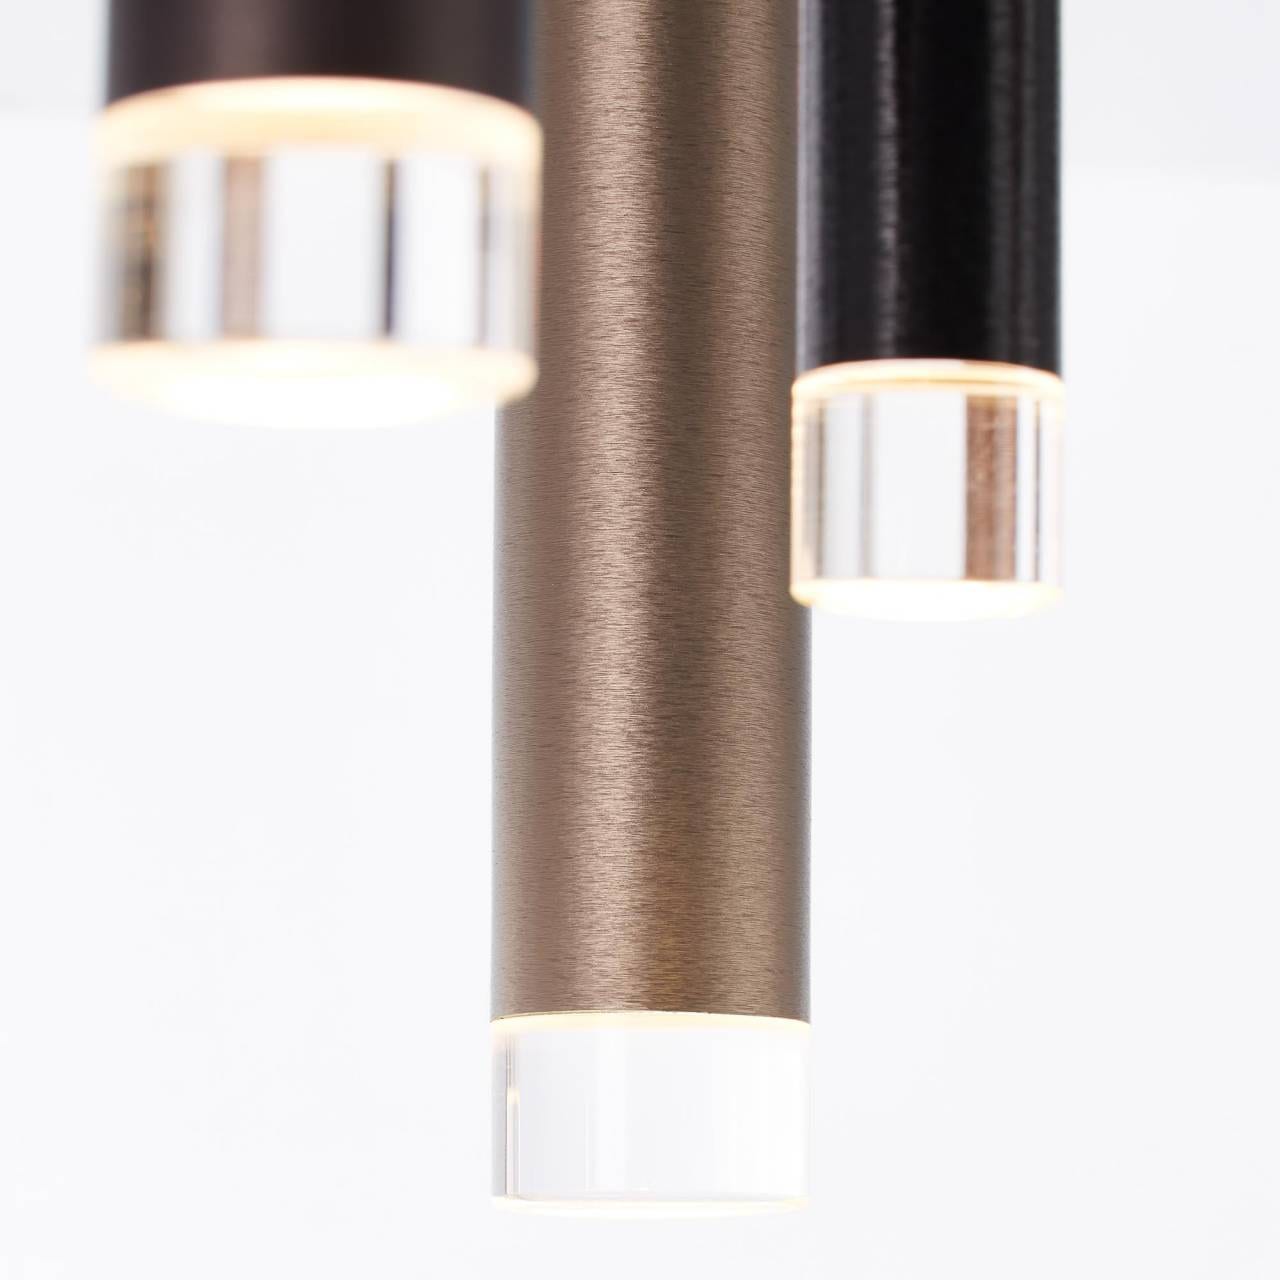 Brilliant LED Deckenleuchte Metall, lm, | cm, warmweiß, 12 50x35 BAUR alu/schwarz/braun/kaffee »Cembalo«, flammig-flammig, dimmbar, 5800